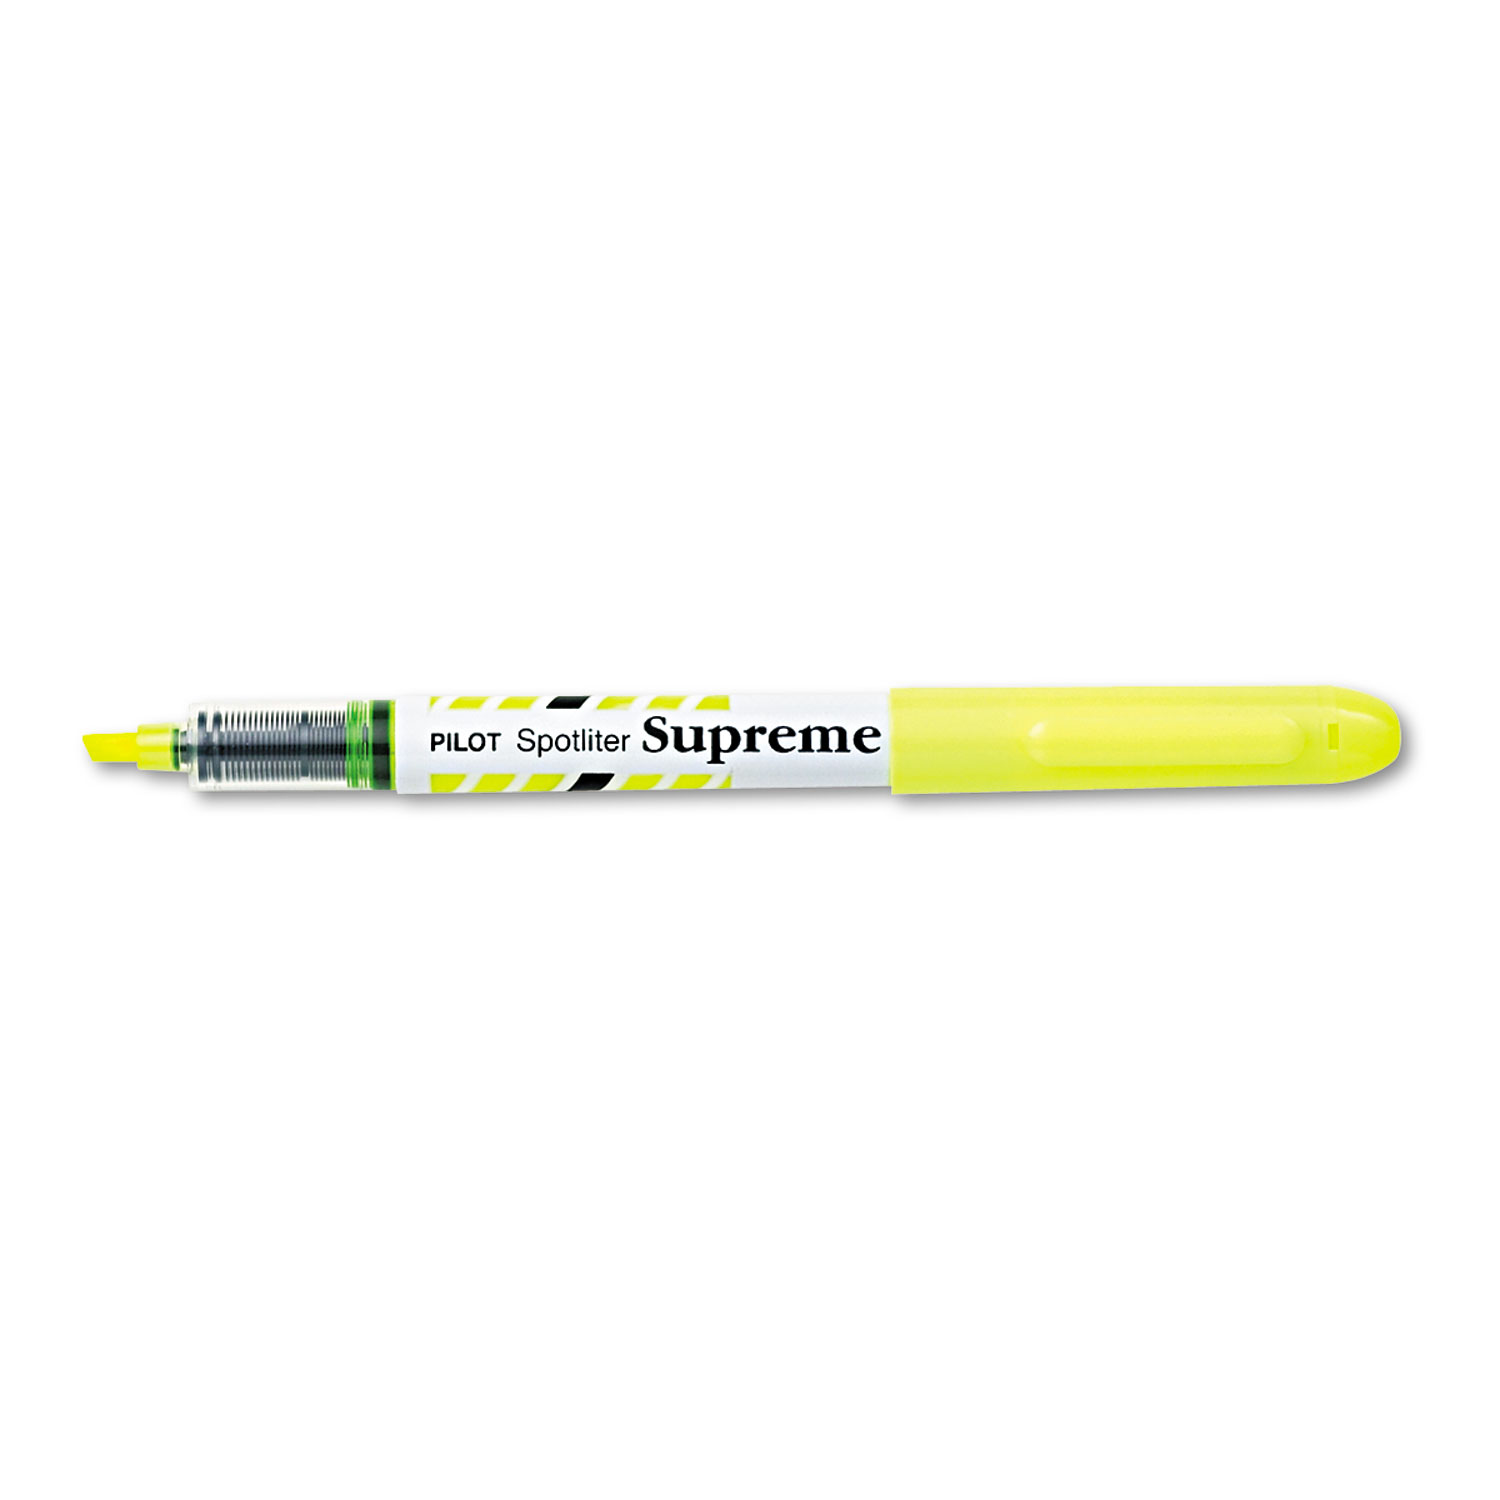 Spotliter Supreme Highlighter, Chisel Tip, Fluorescent Yellow Ink, Dozen